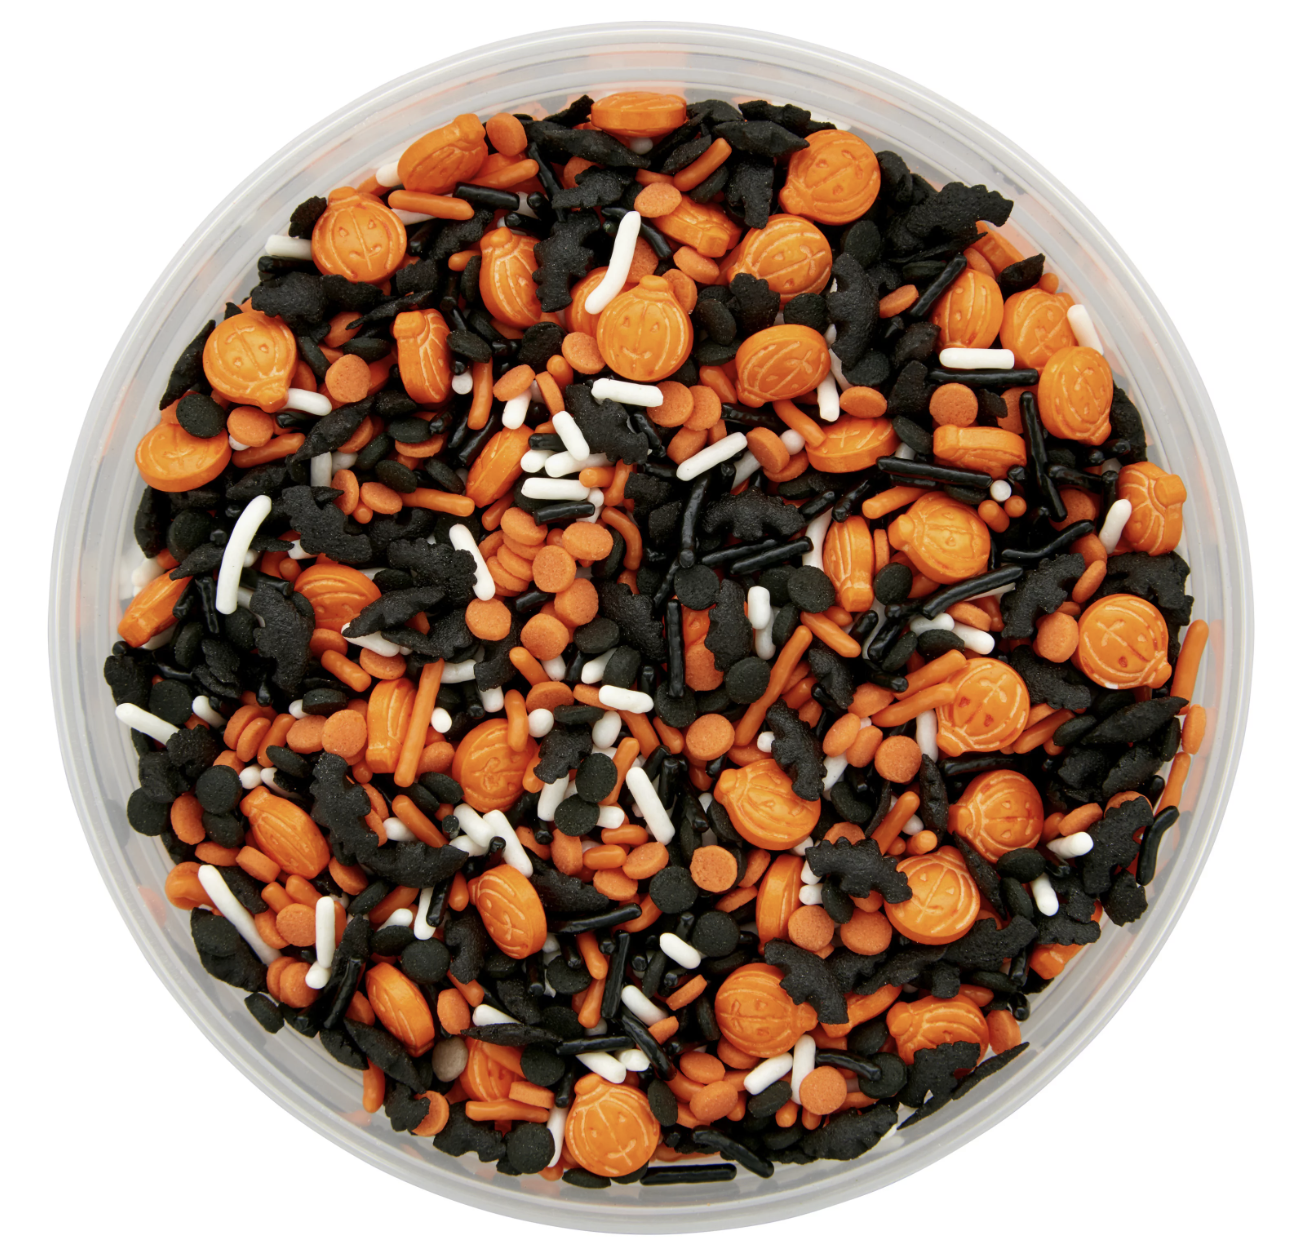 Standard orange and black sprinkles mixed with pumpkin and bat sprinkles